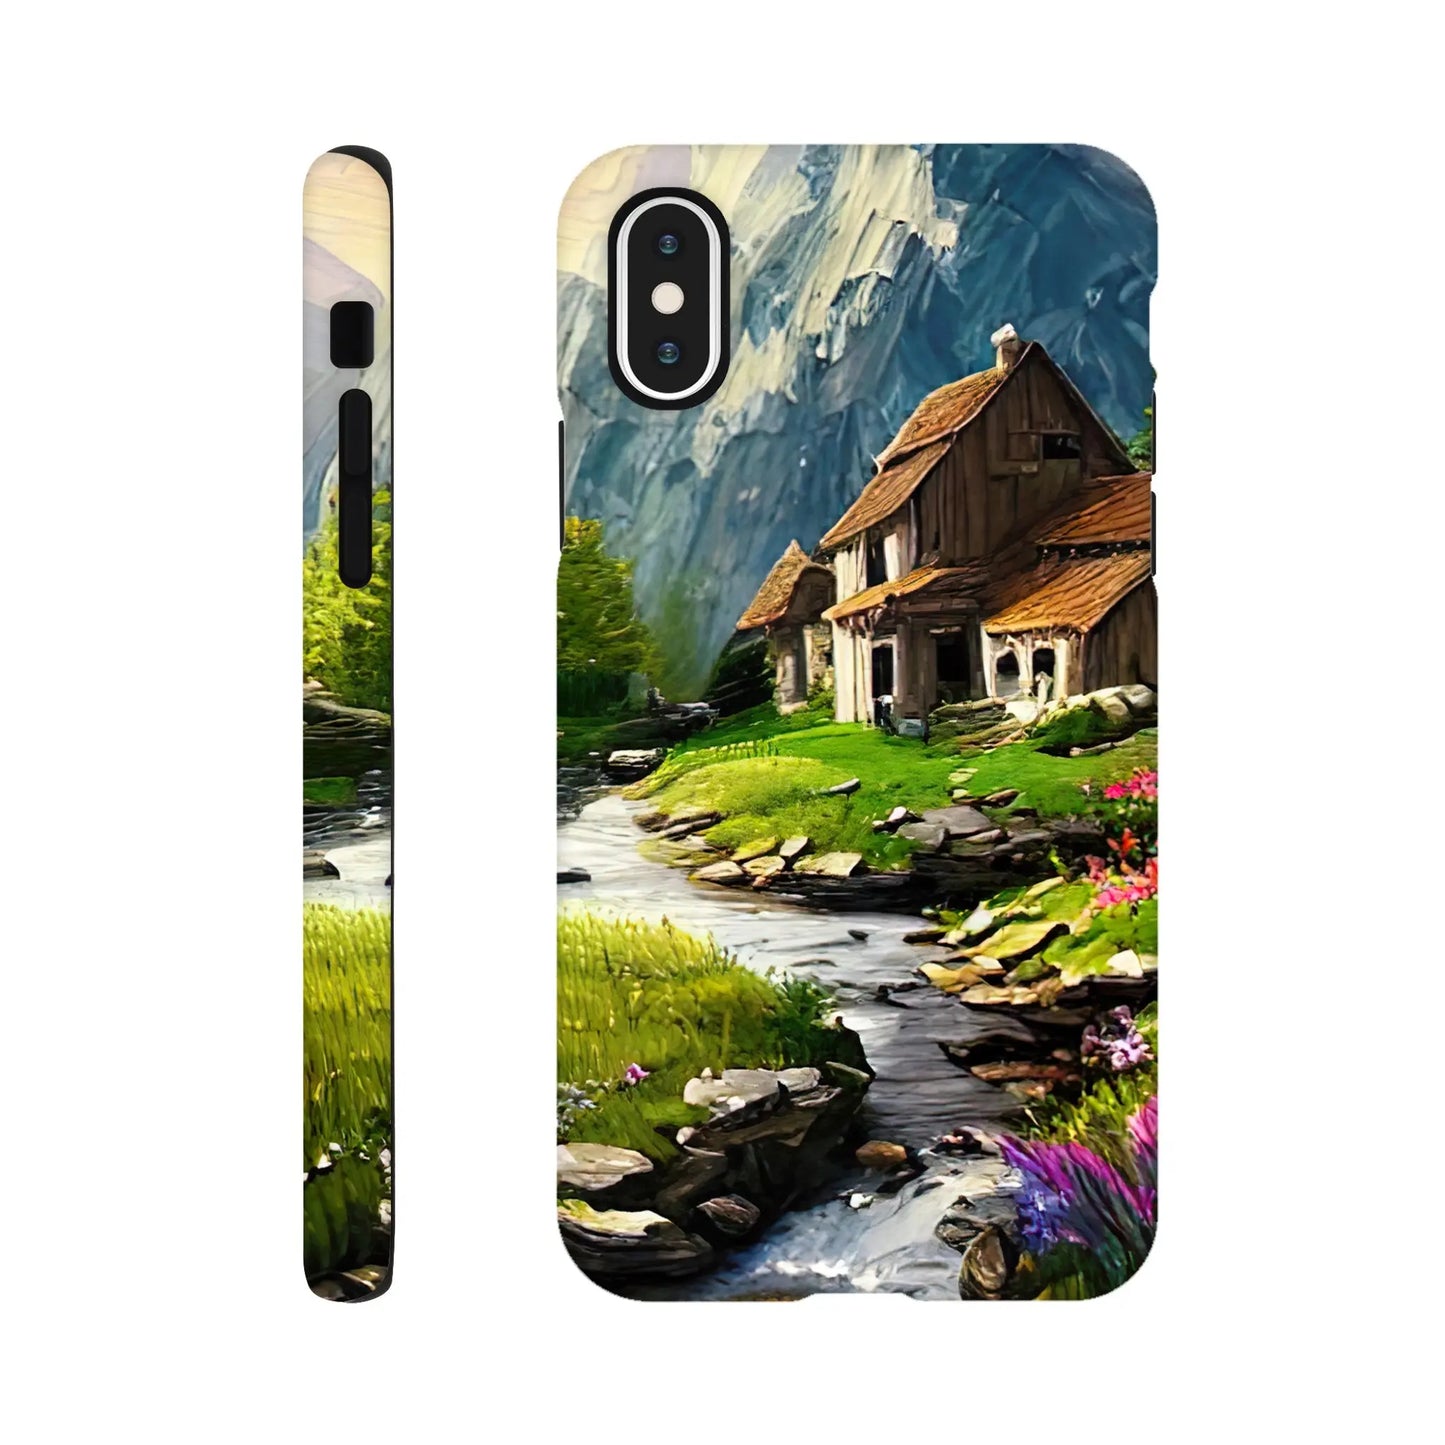 Smartphone-Hülle "Hart" - Berglandschaft - Malerischer Stil, KI-Kunst RolConArt, Landschaften, iPhone-X